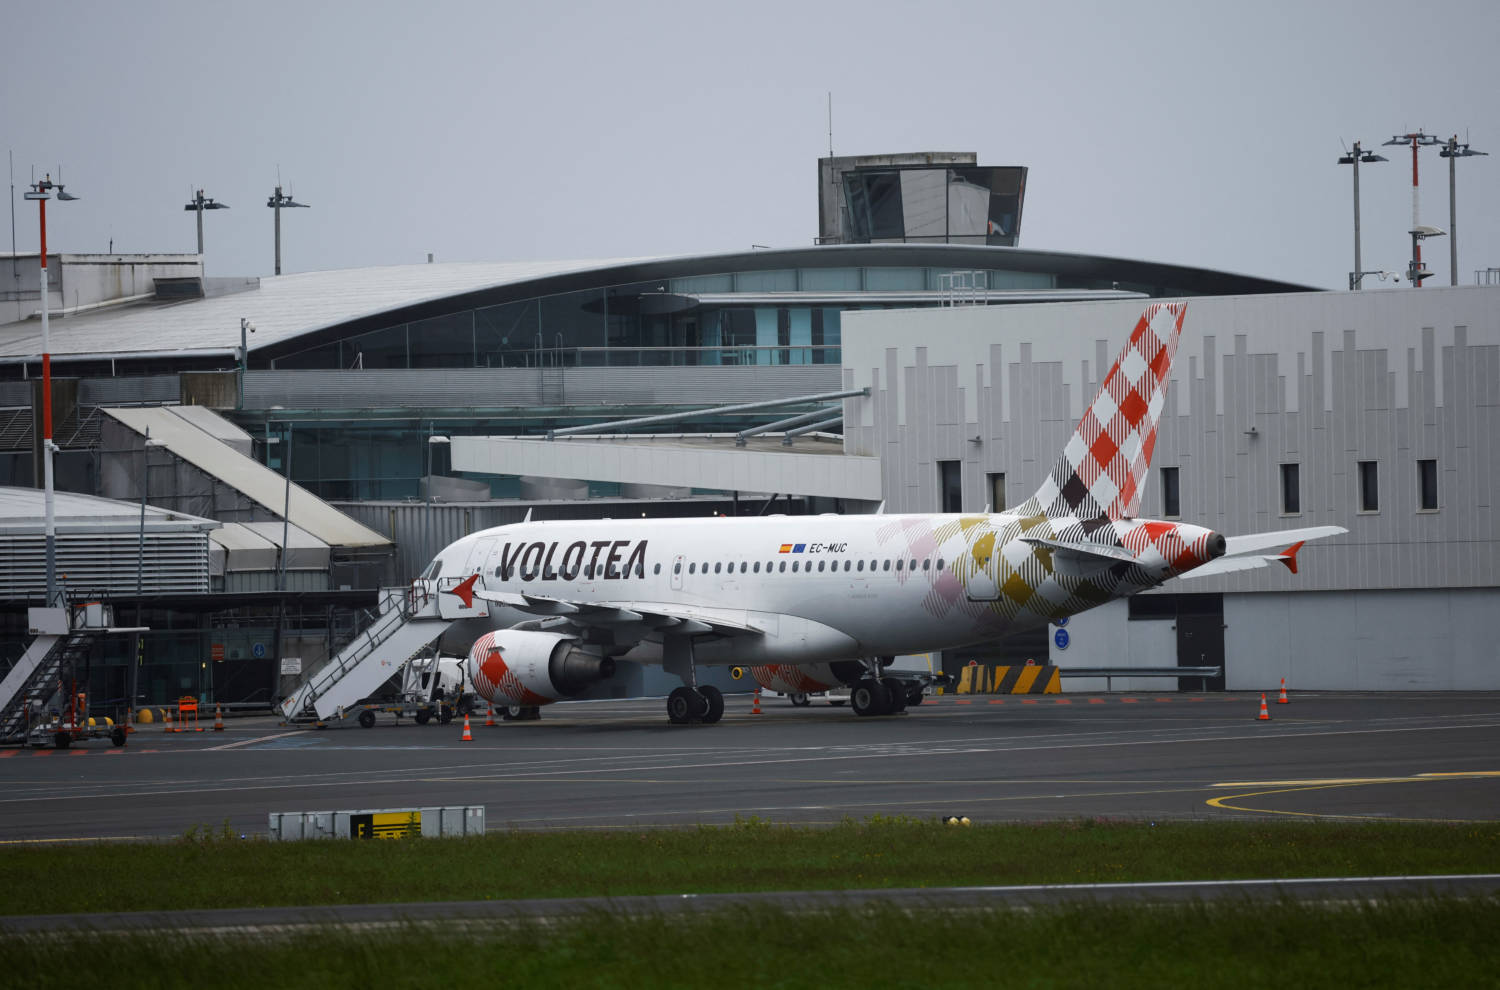 A Volotea Airbus A319 111 Aircraft Is Parked At The Nantes Atlantique Airport In Bouguenais